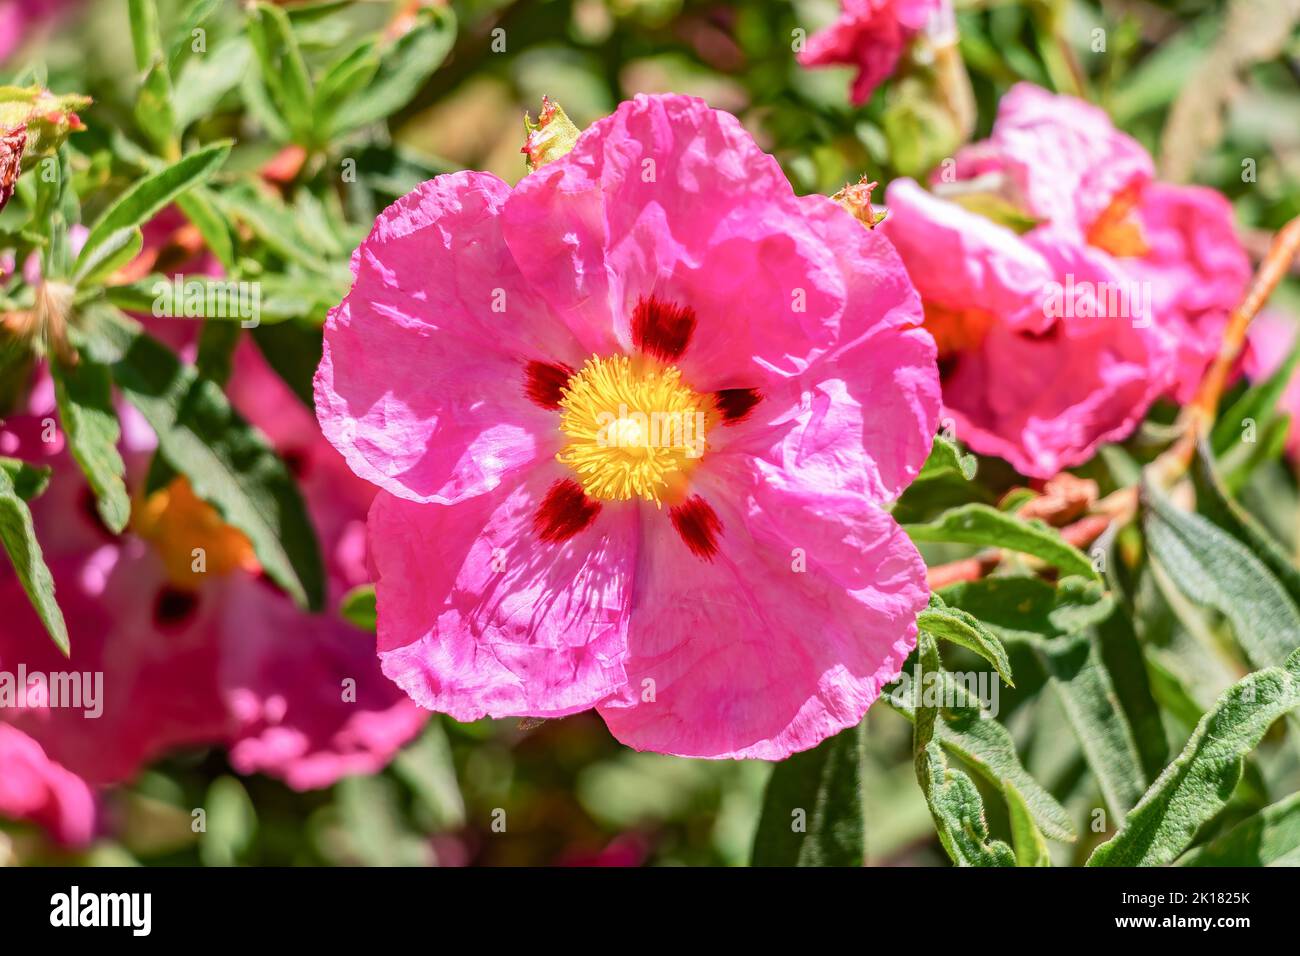 Nombres de flores rosadas fotografías e imágenes de alta resolución - Alamy